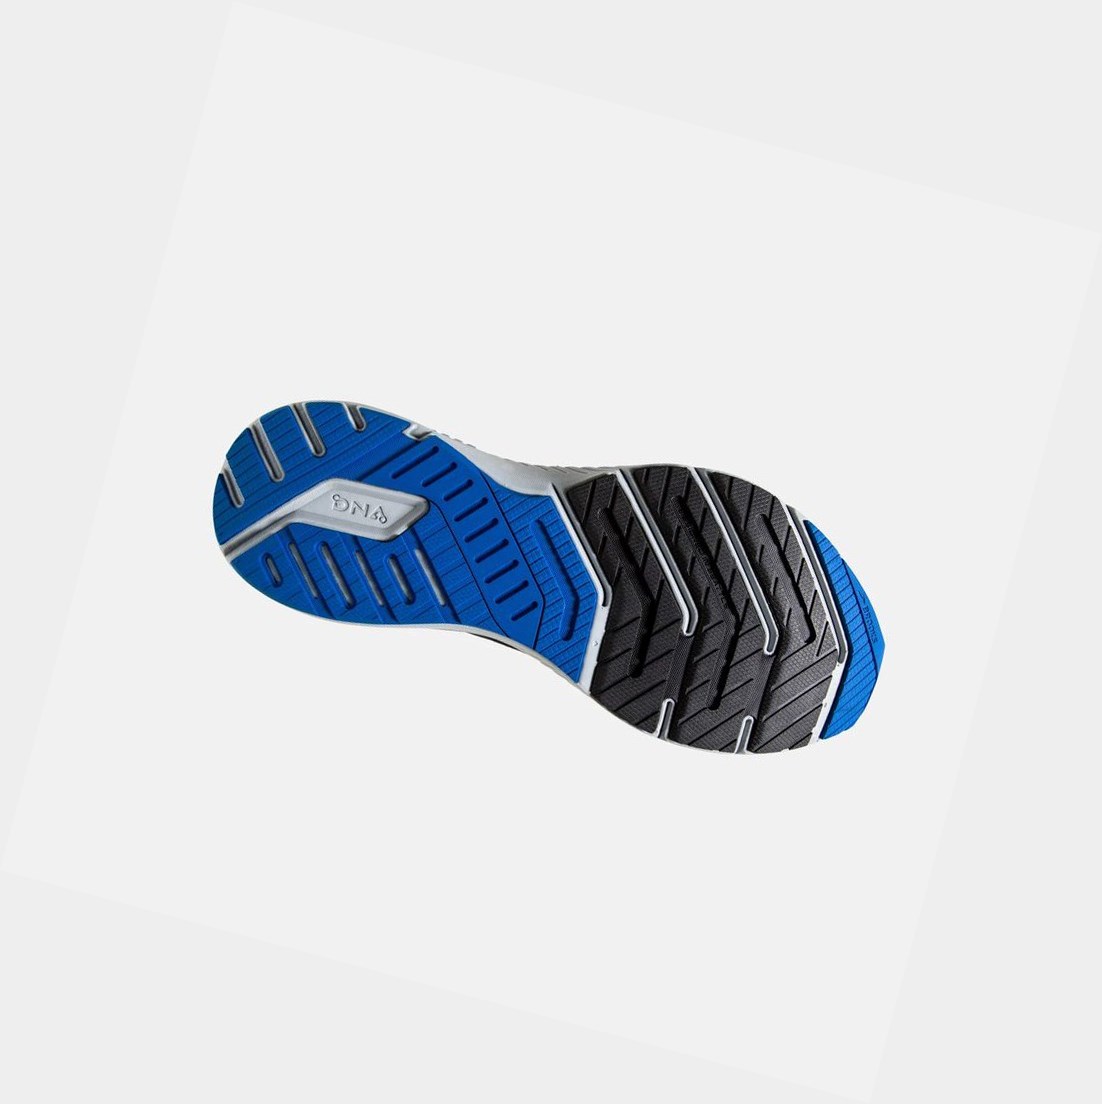 Brooks Launch GTS 8 Men's Road Running Shoes Black / Grey / Blue | VRGU-78423